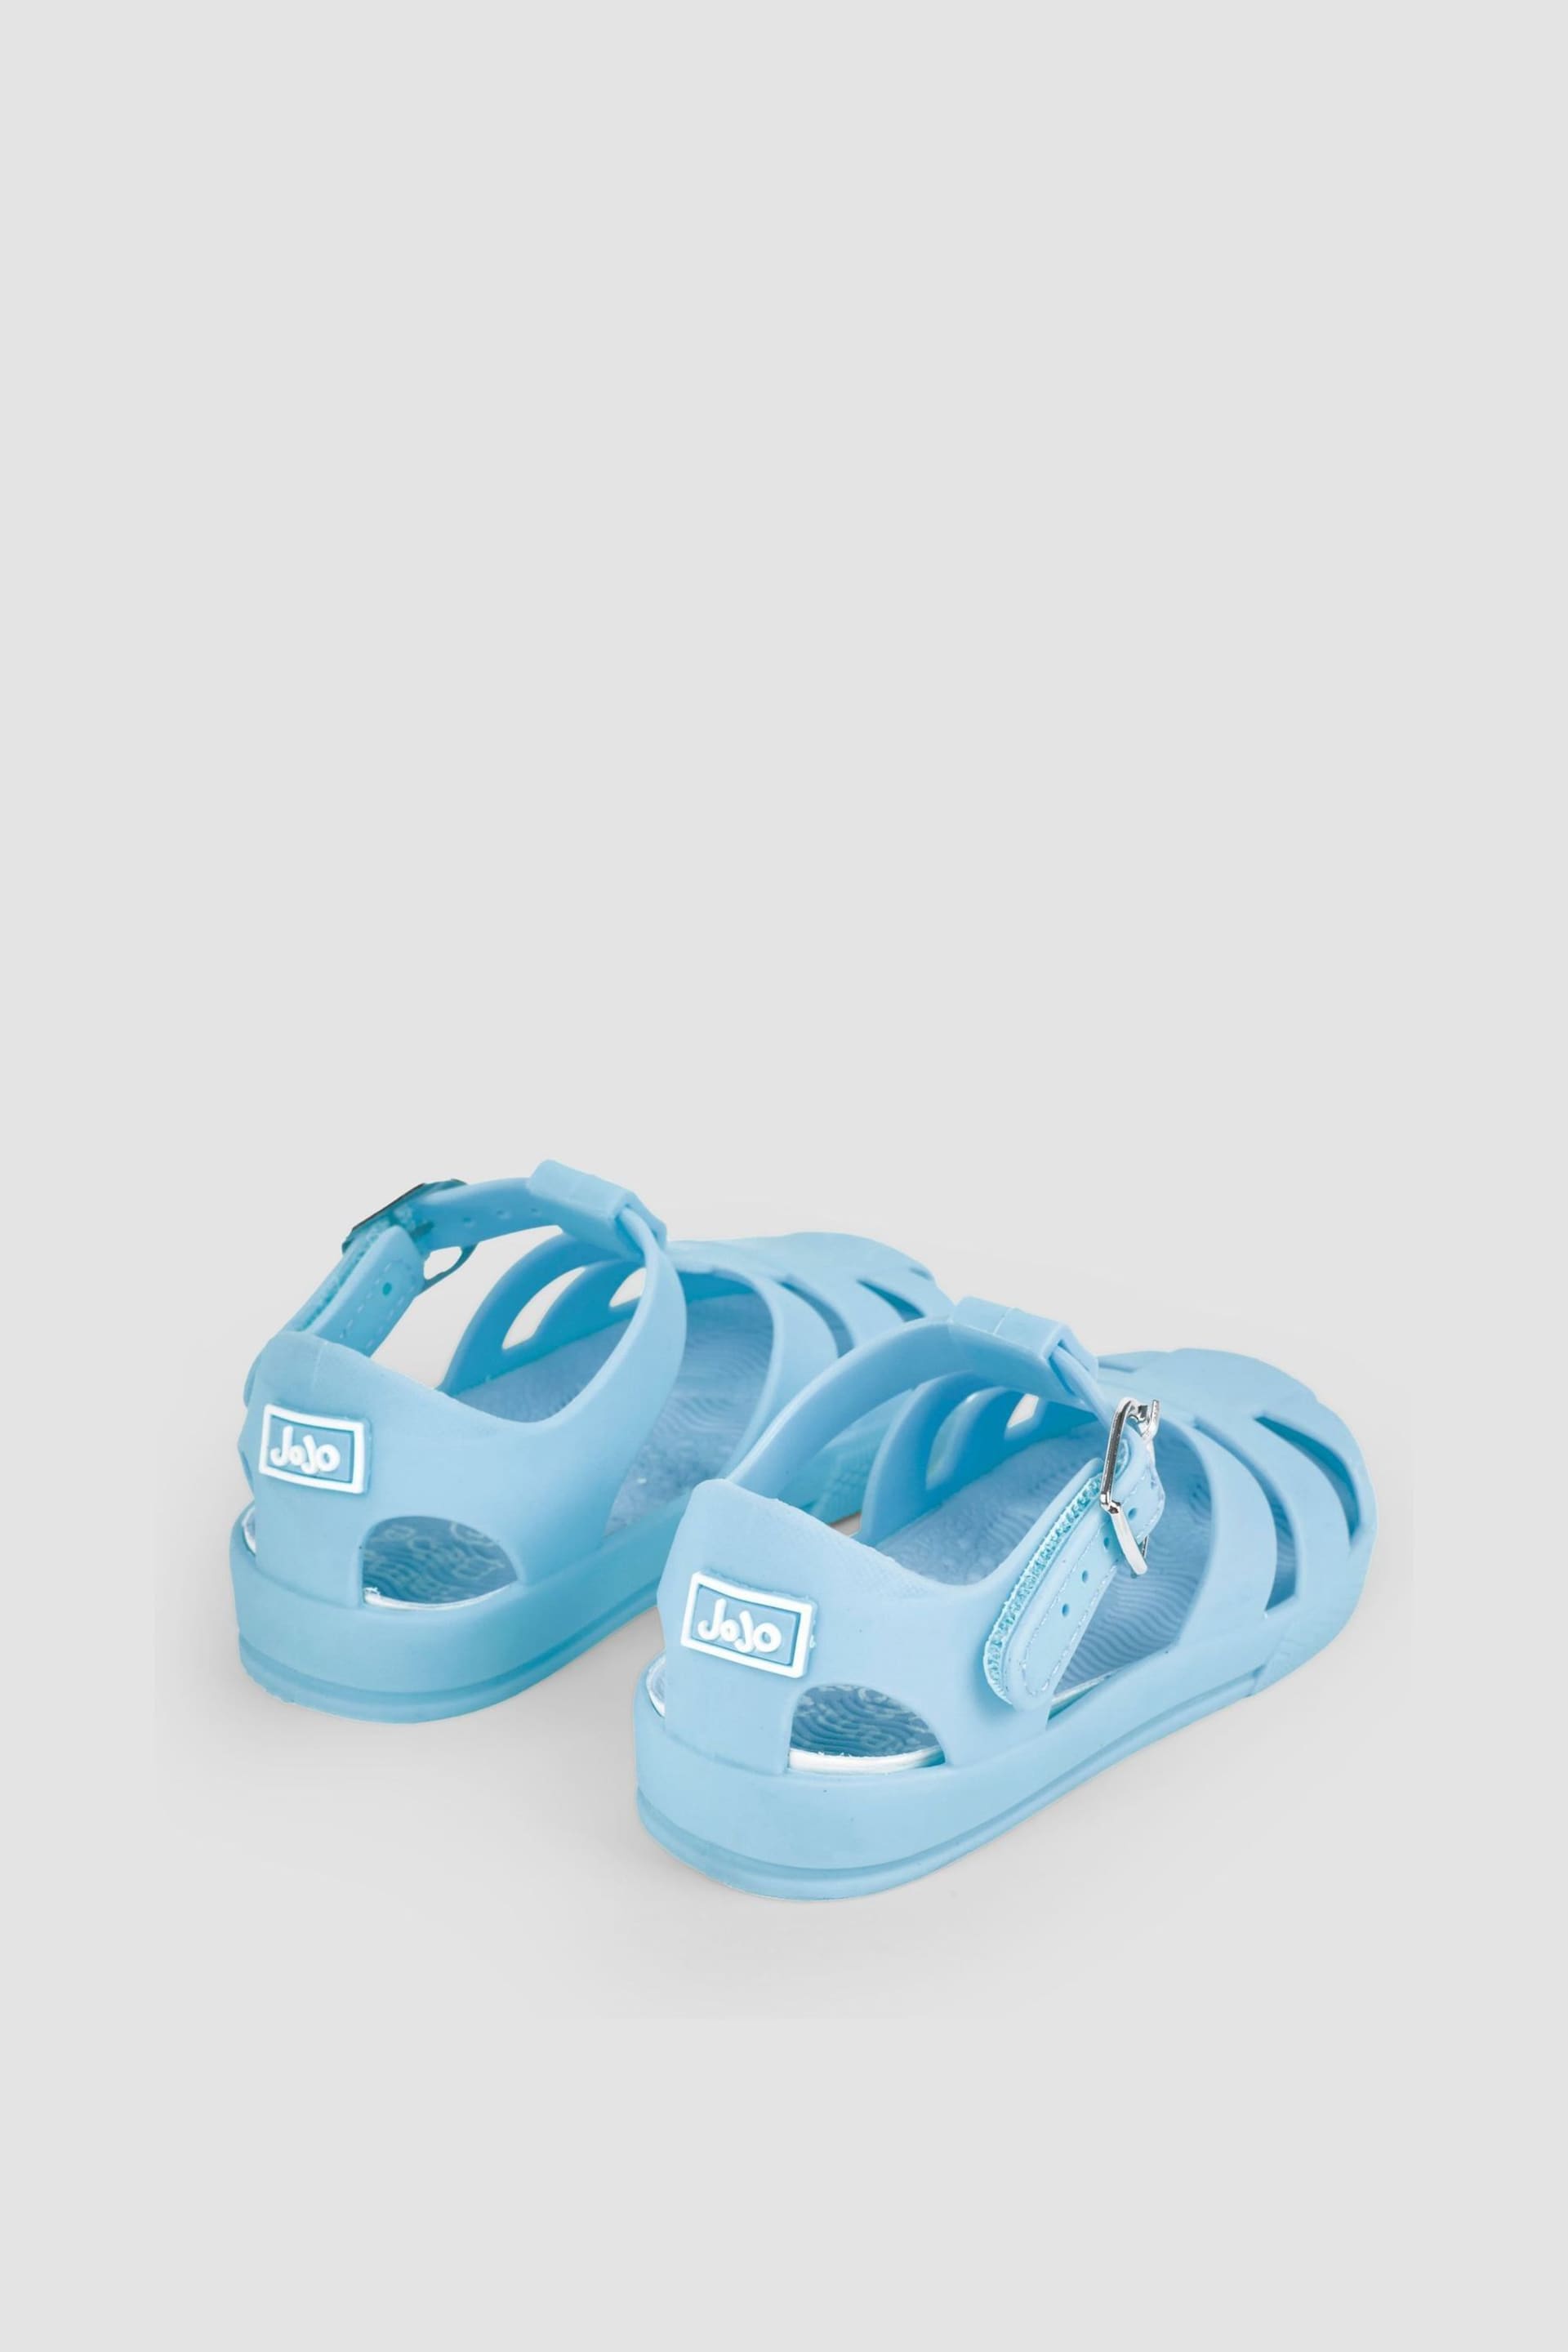 JoJo Maman Bébé Blue Jelly Sandals - Image 2 of 5